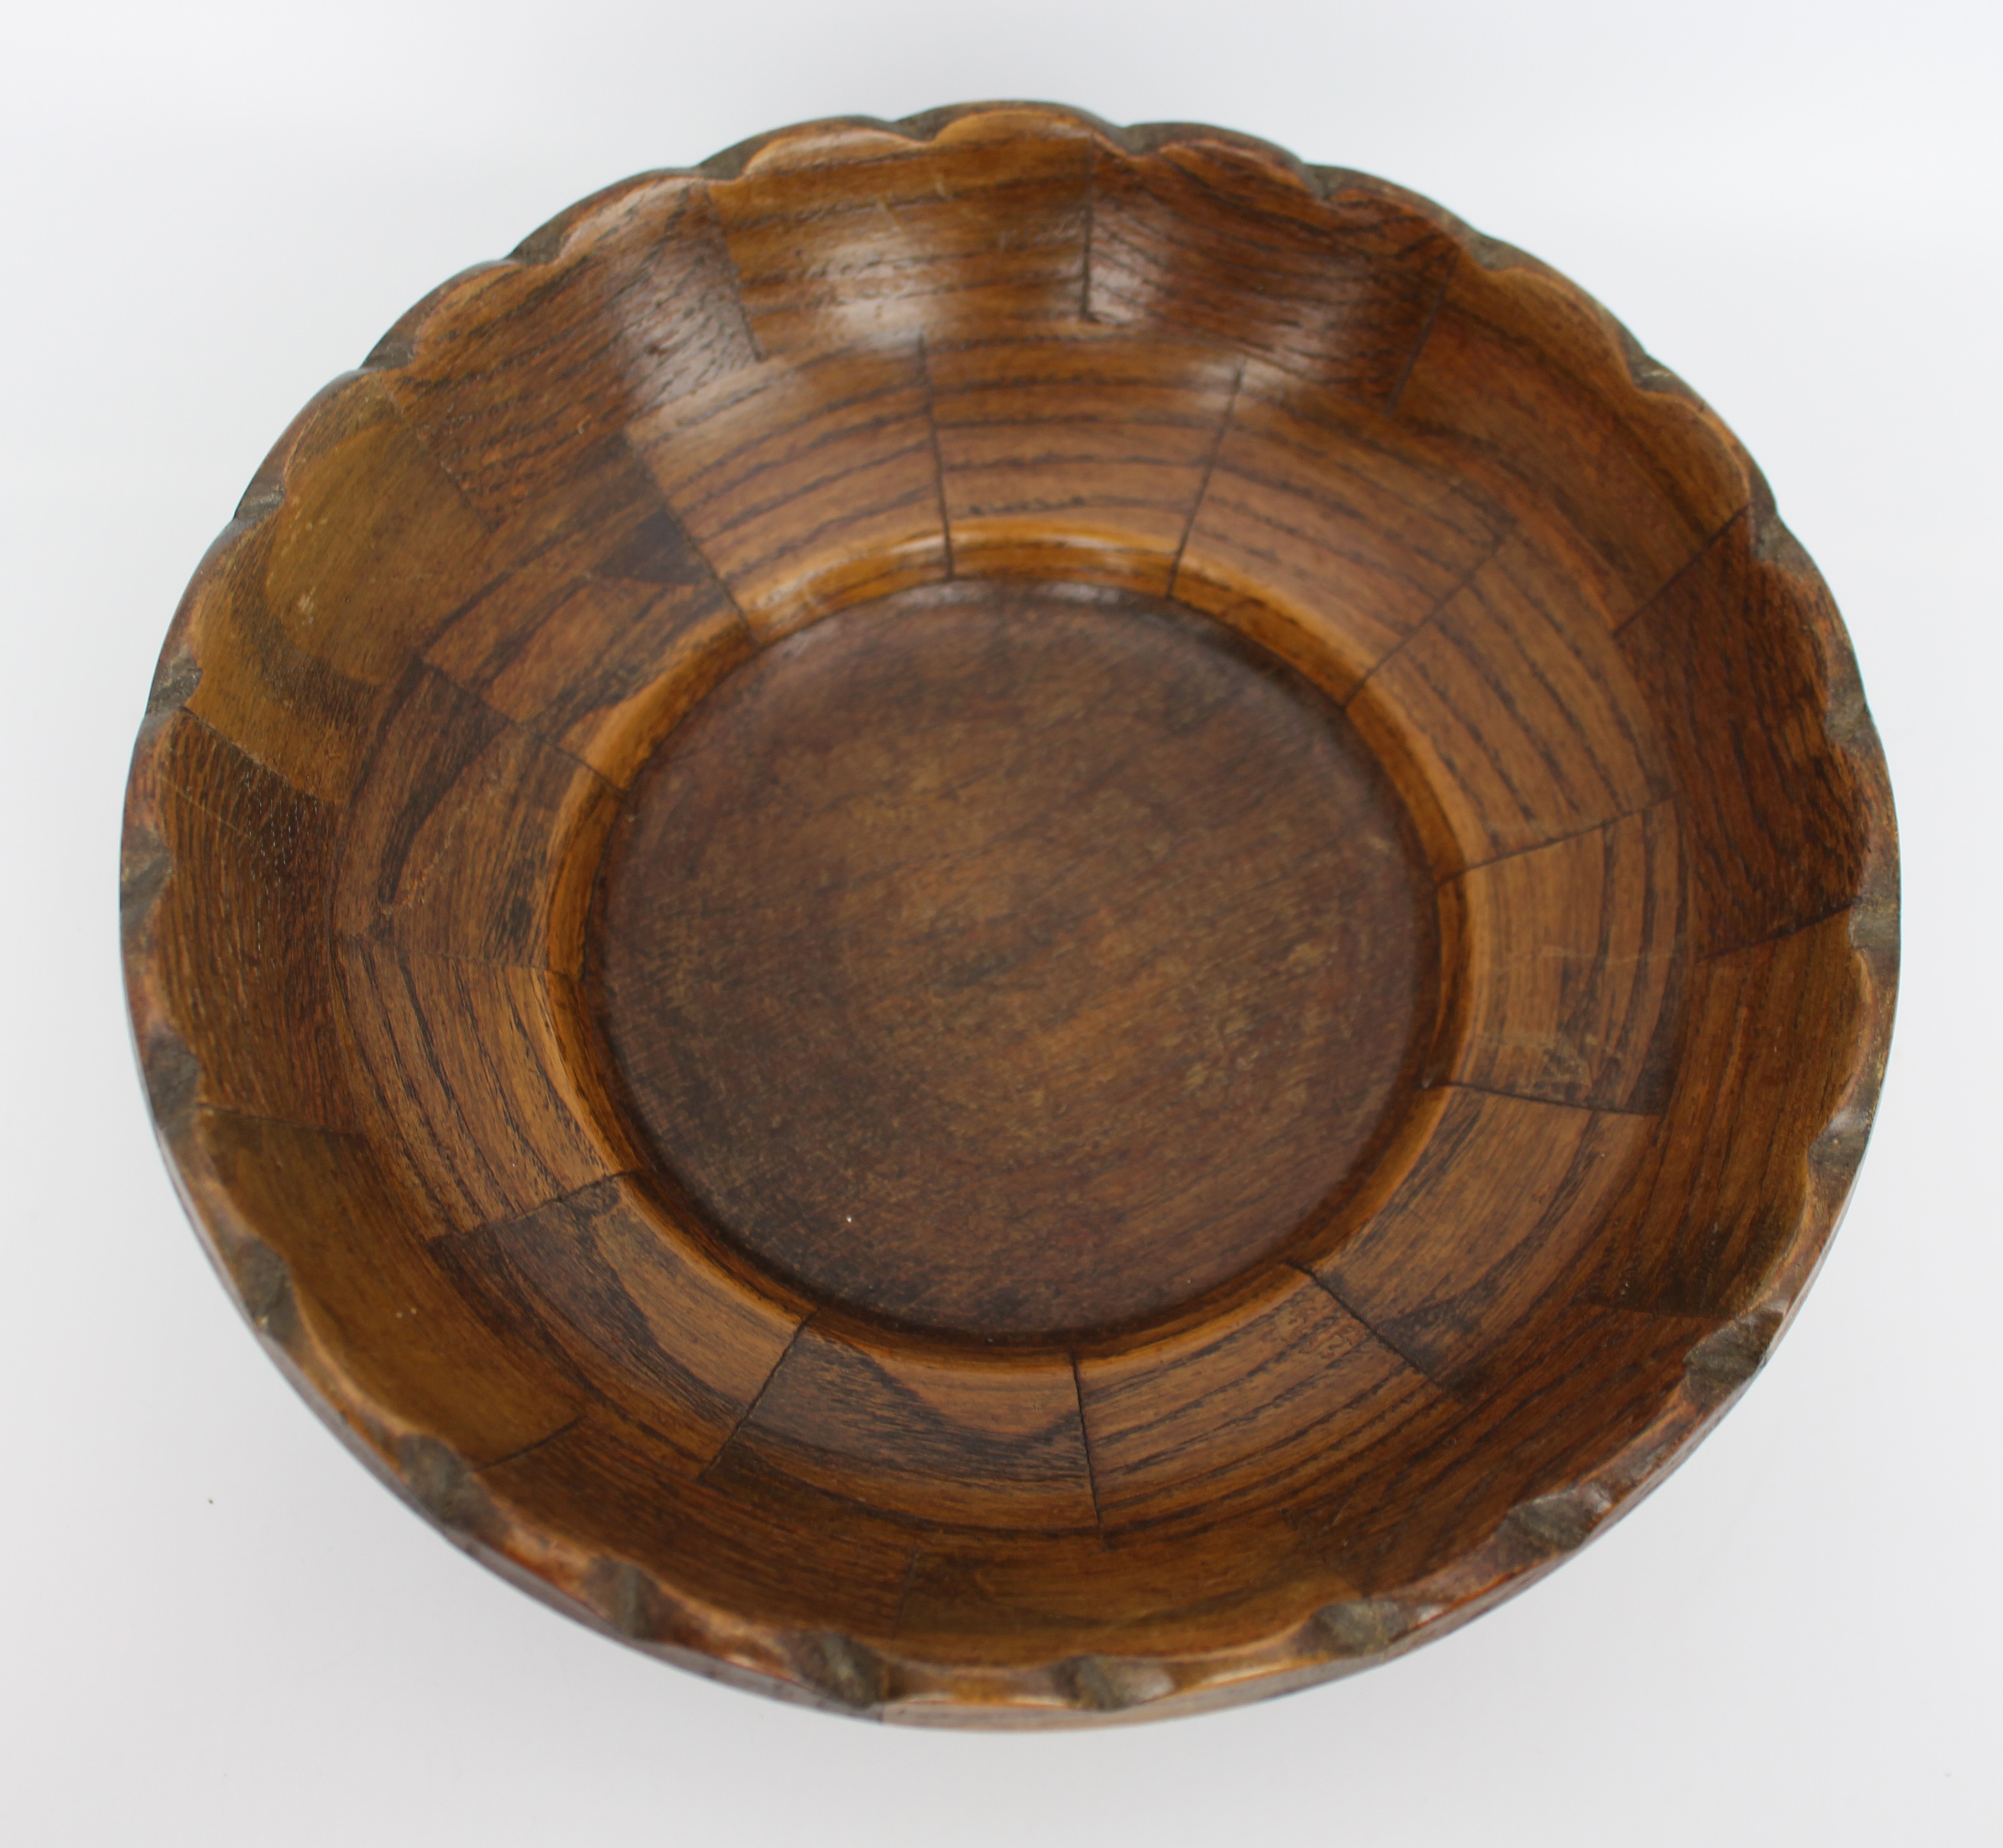 Vintage Turned Wood Bowl - Image 2 of 2